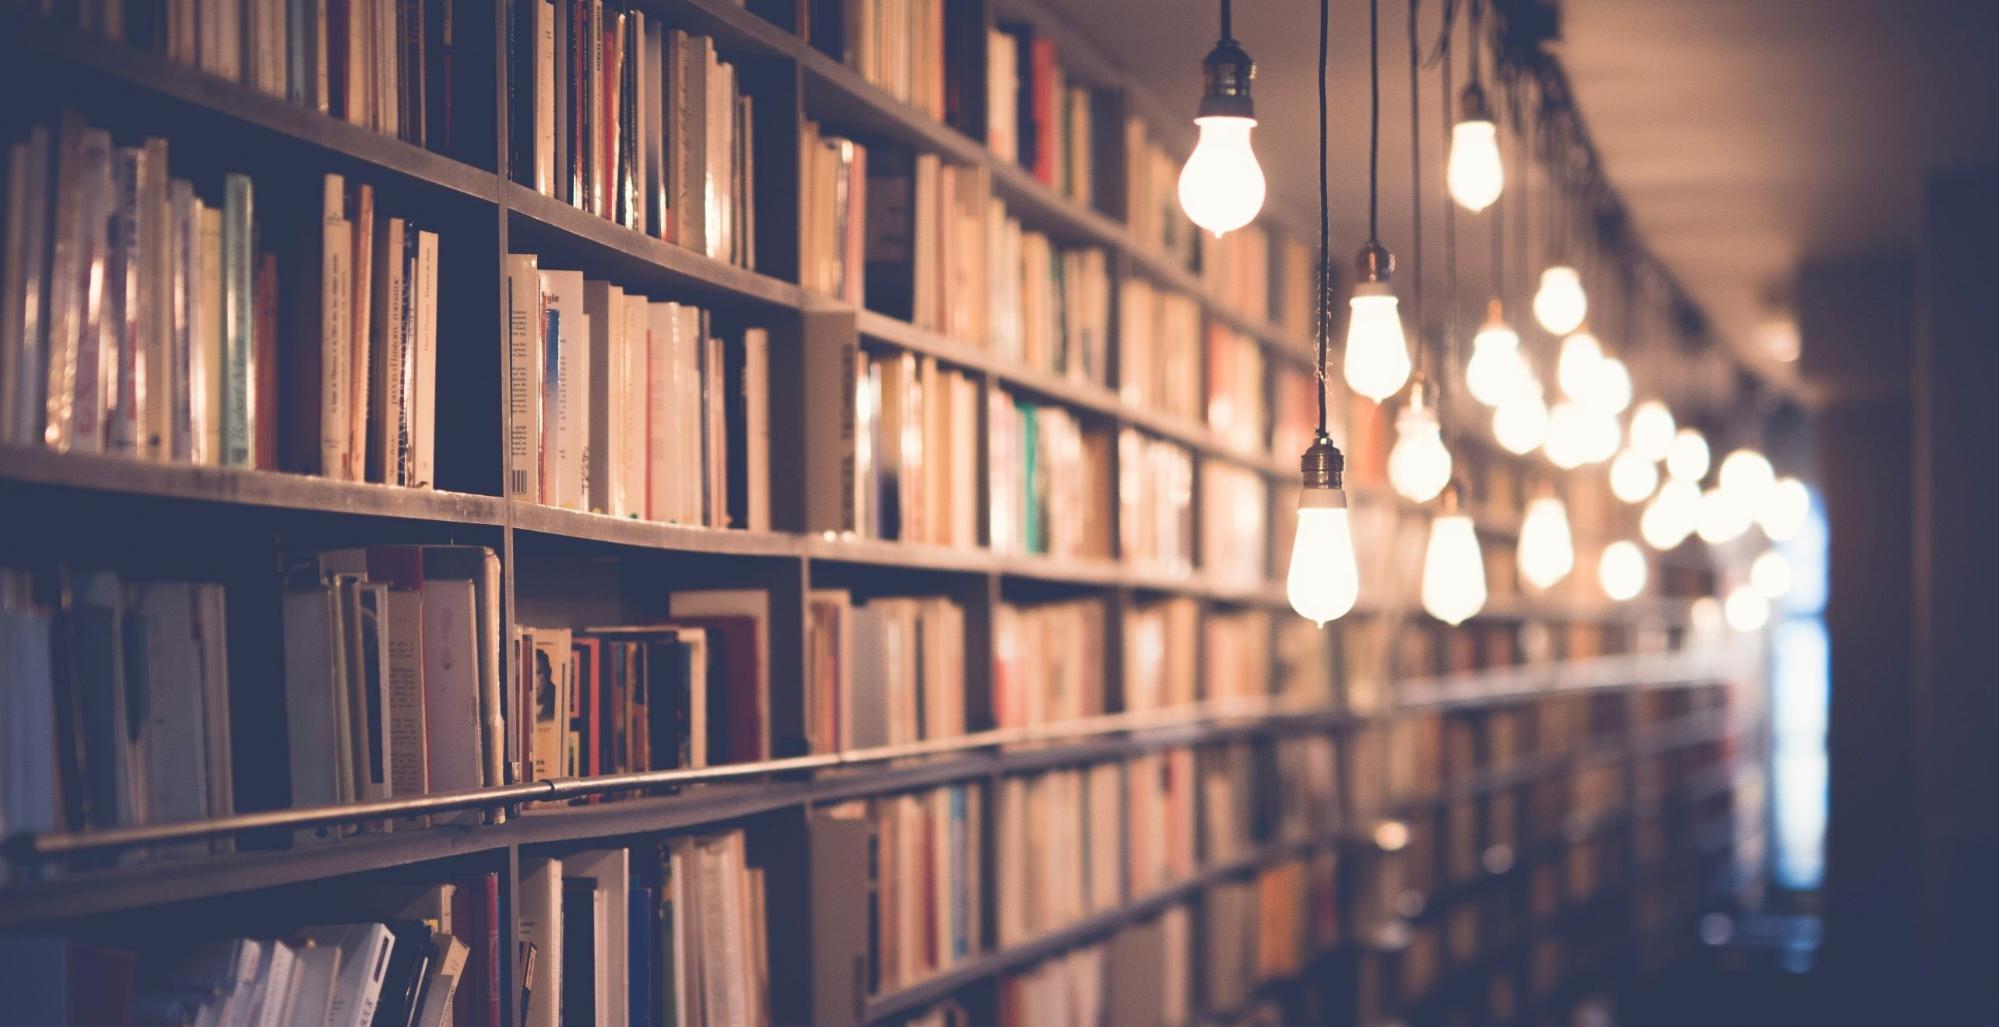 Book shelves lit by vintage light bulbs